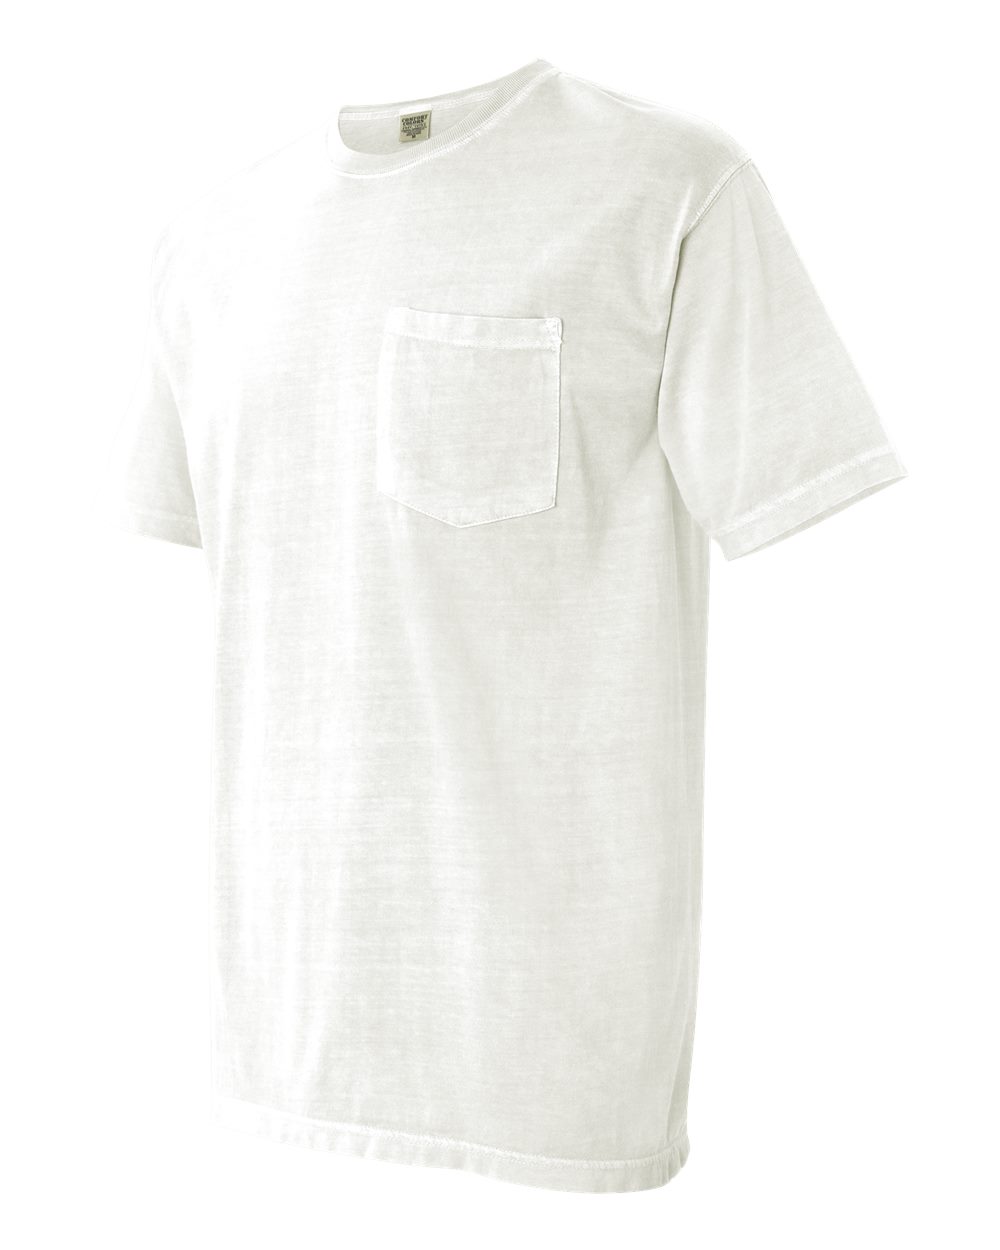 Comfort Colors 6030CC Garment Dyed Pocket T Shirt Features: Wide